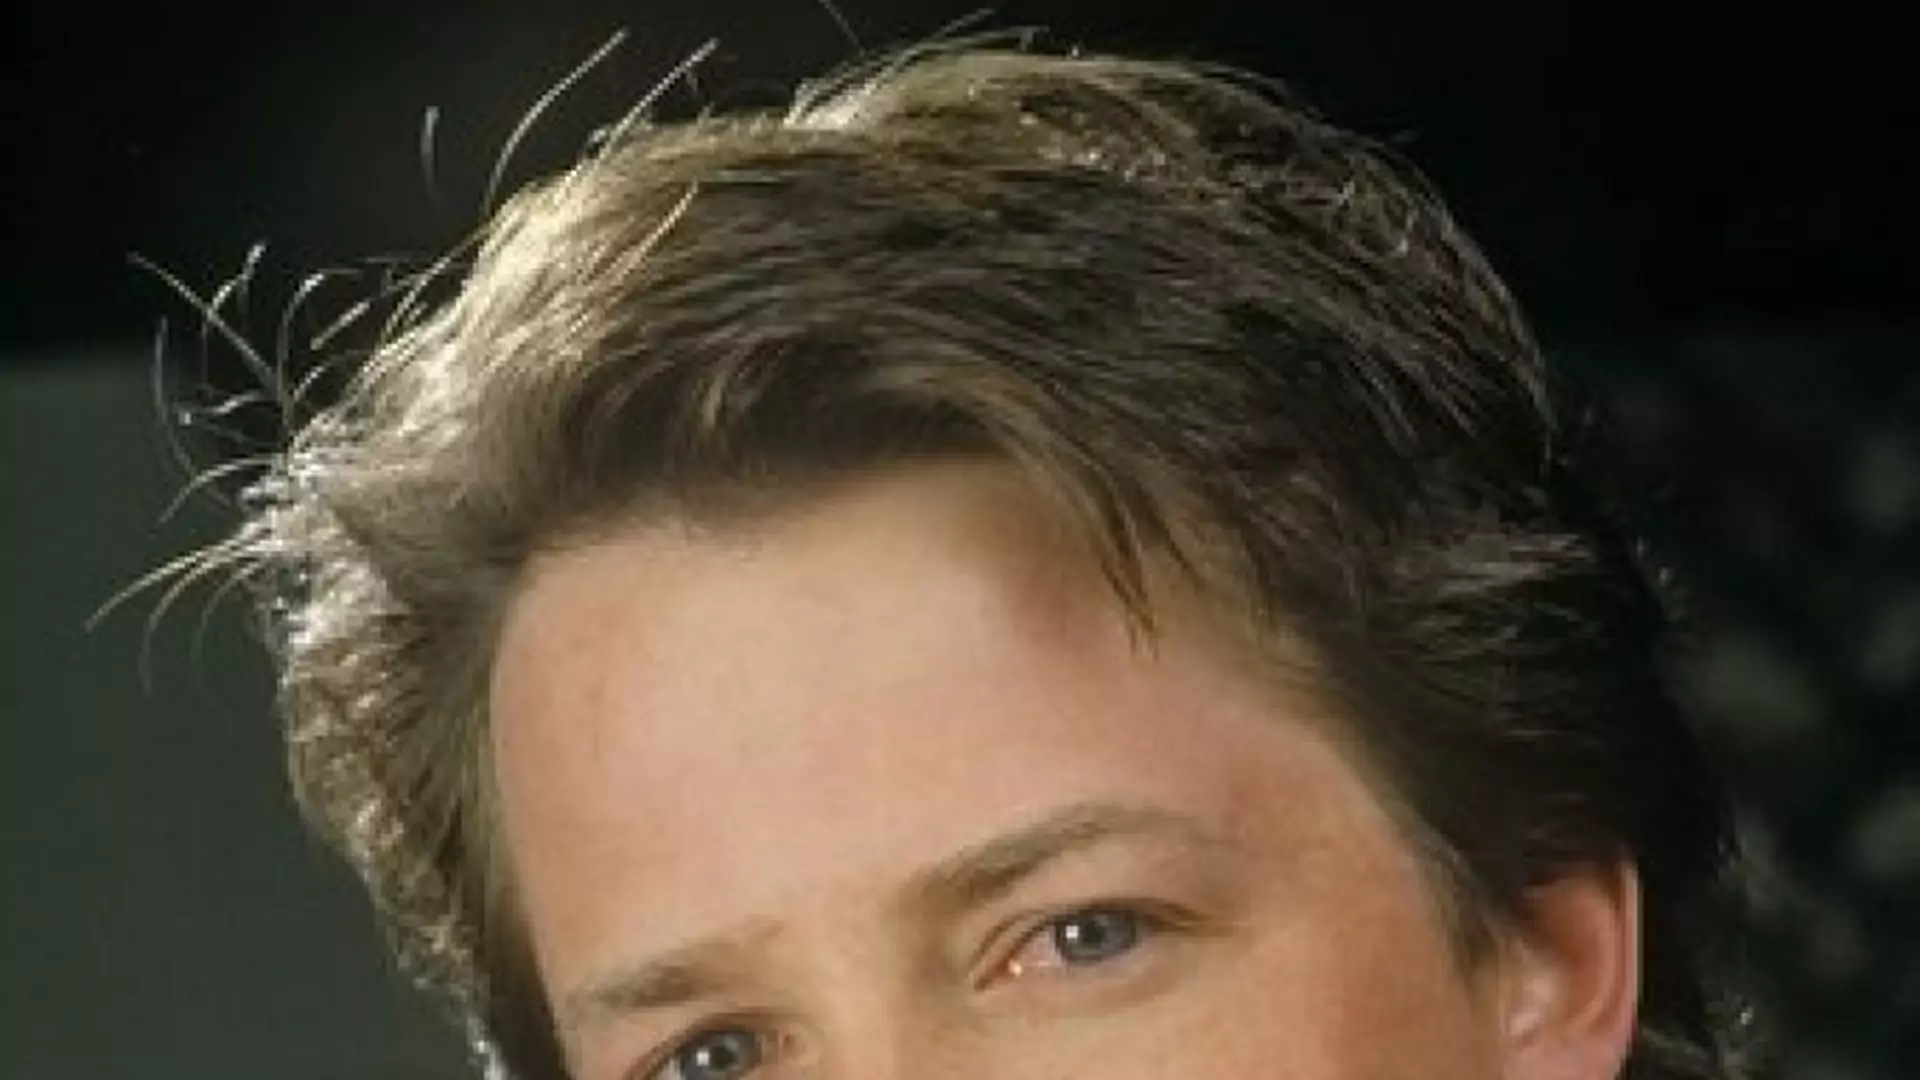 Michael J Fox - Albumy fanów